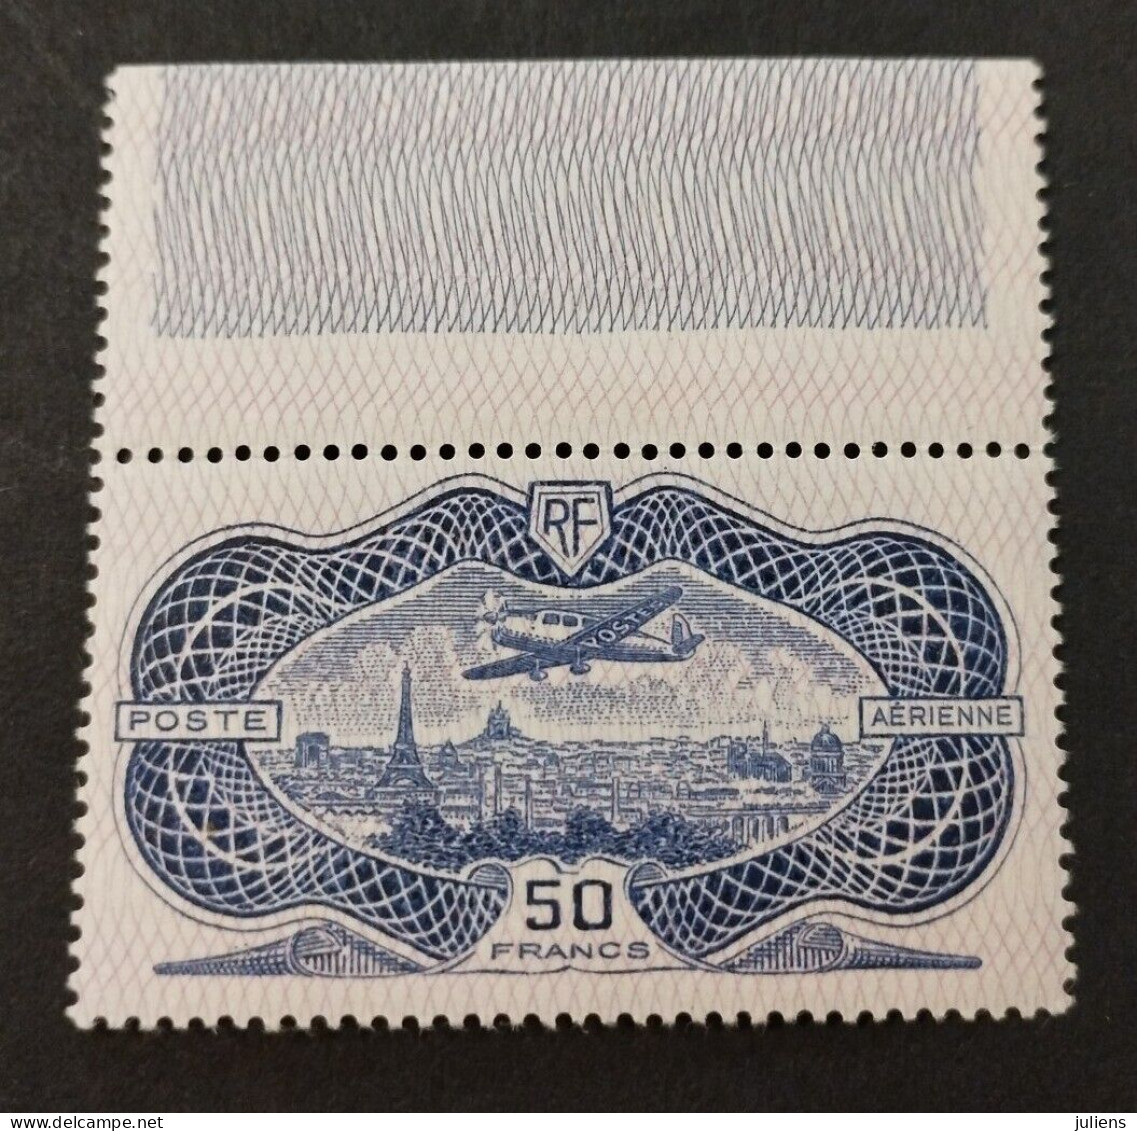 FRANCE POSTE AERIENNE PA 15 PA15 NEUF** SIGNE BORD DE FEUILLE COTE +++ #278 - 1927-1959 Mint/hinged